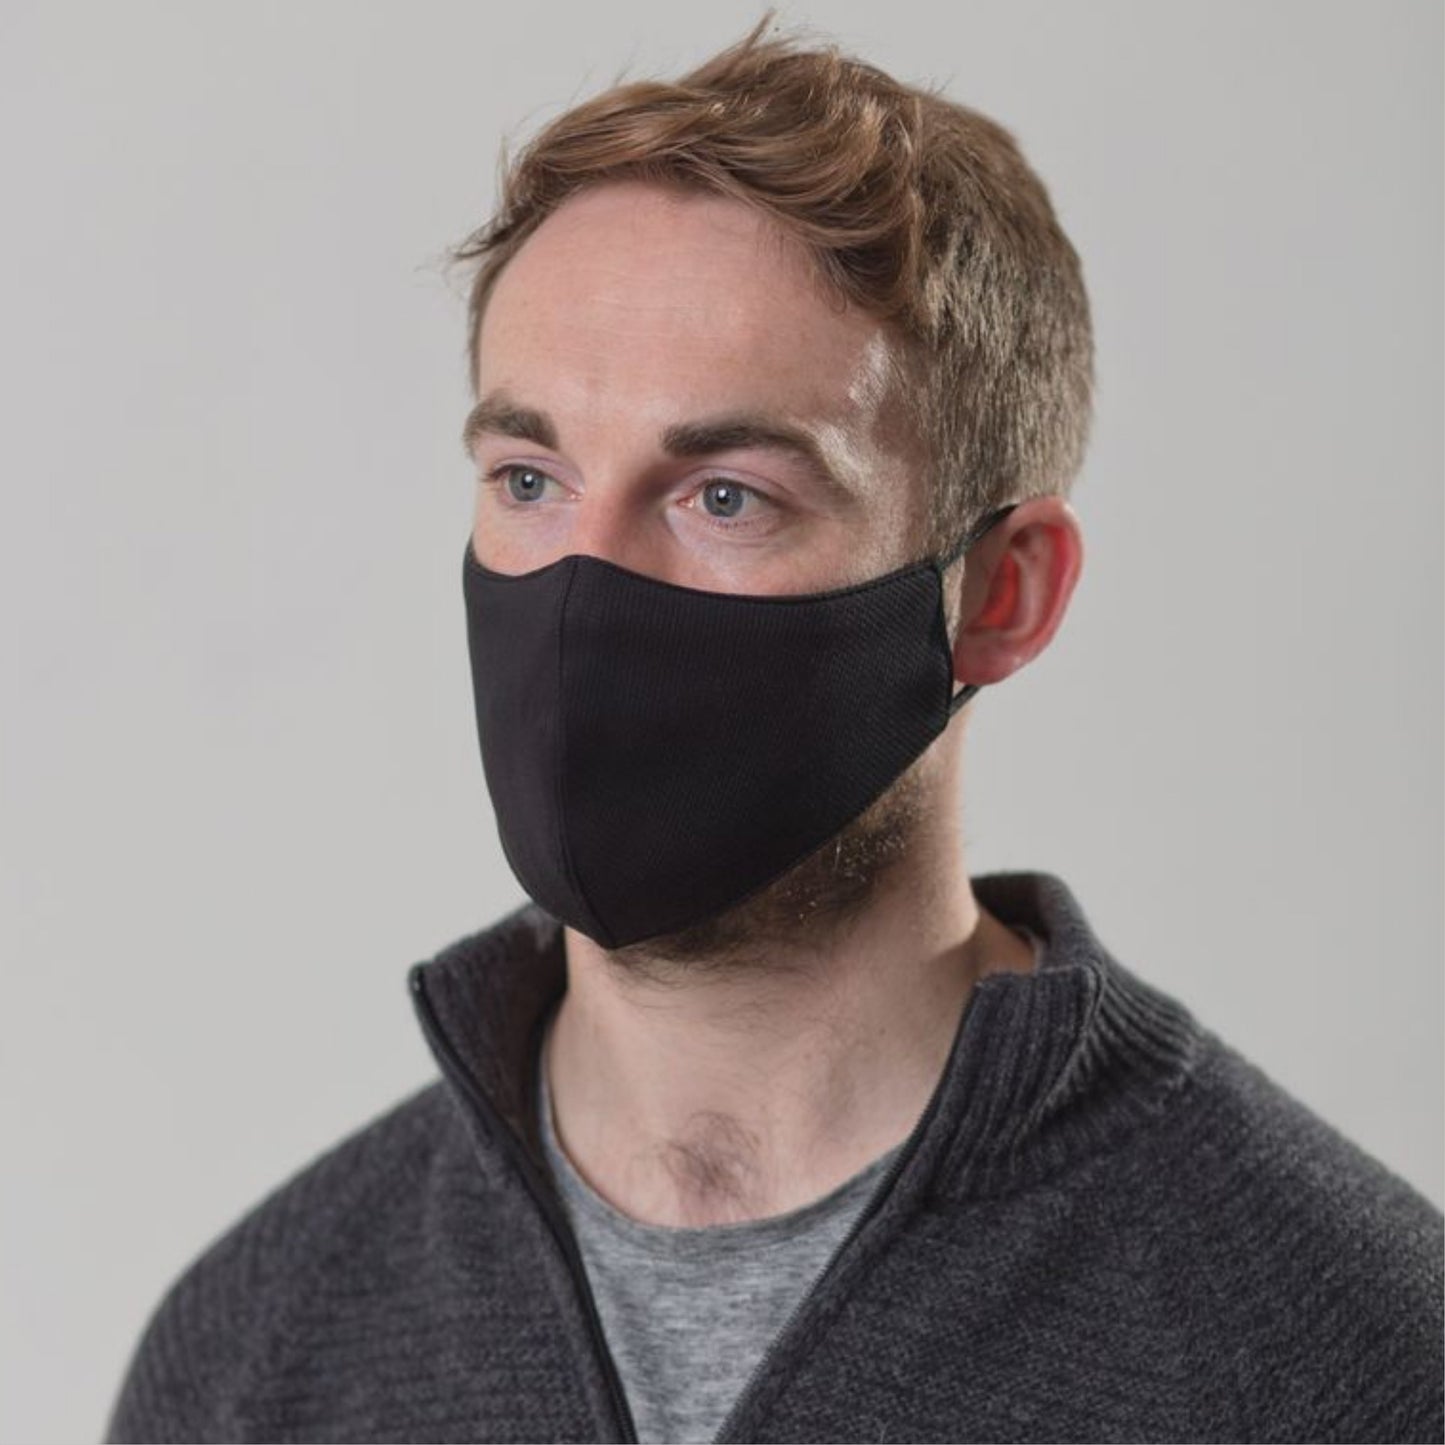 10 Pack High-Performance Face Mask (Black)